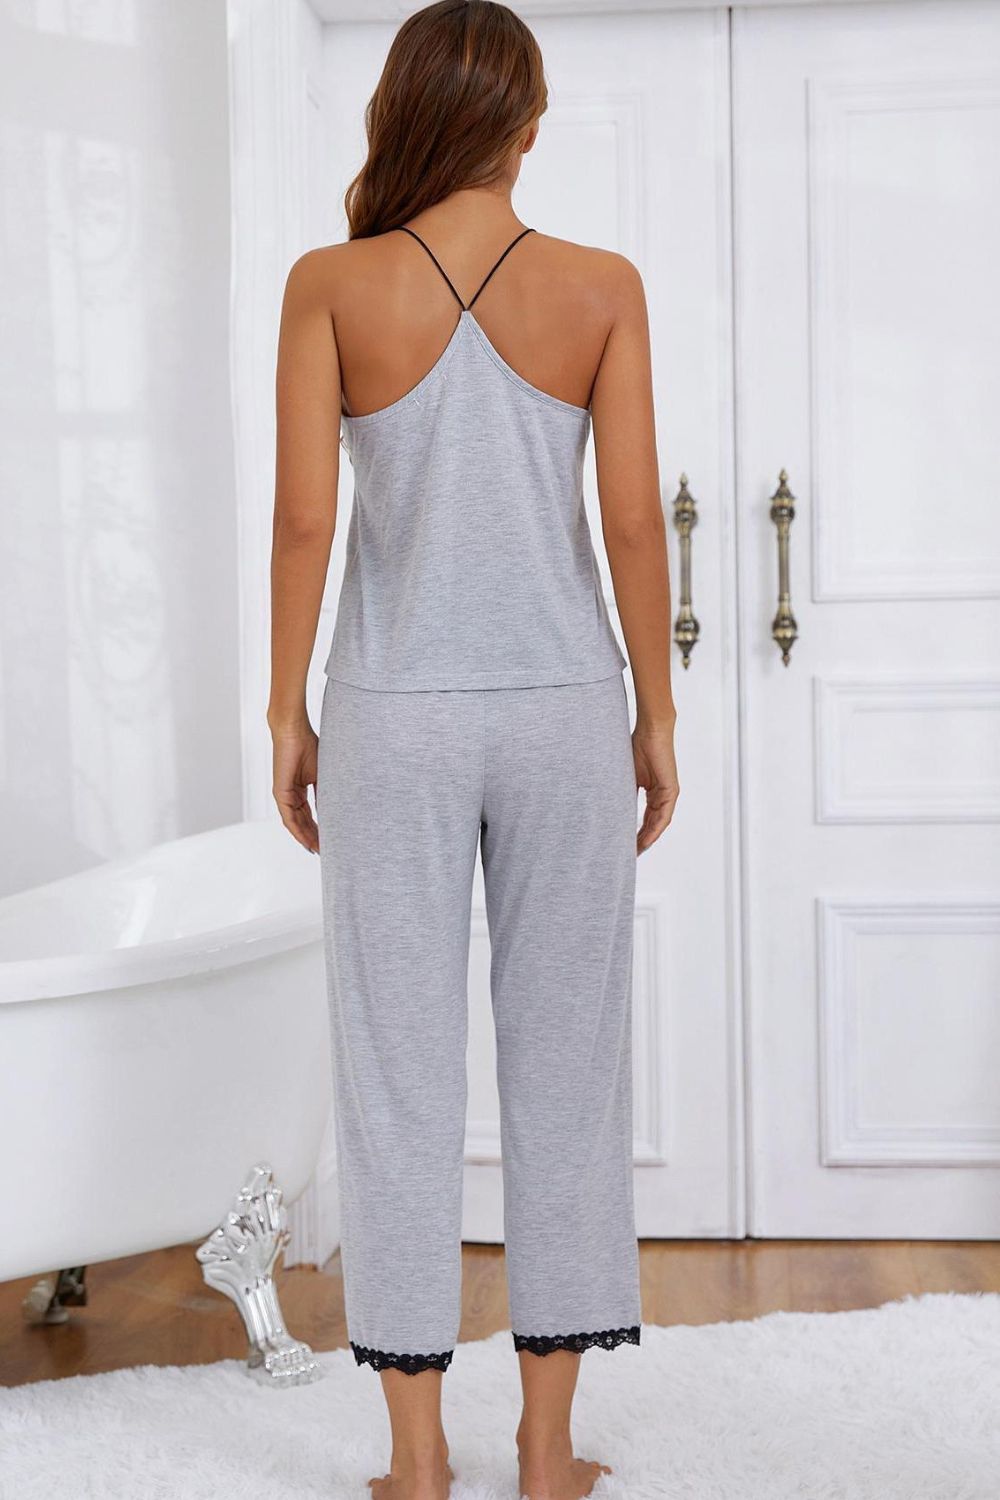 Women’s Halter Neck Cami and Lace Trim Pajama Set